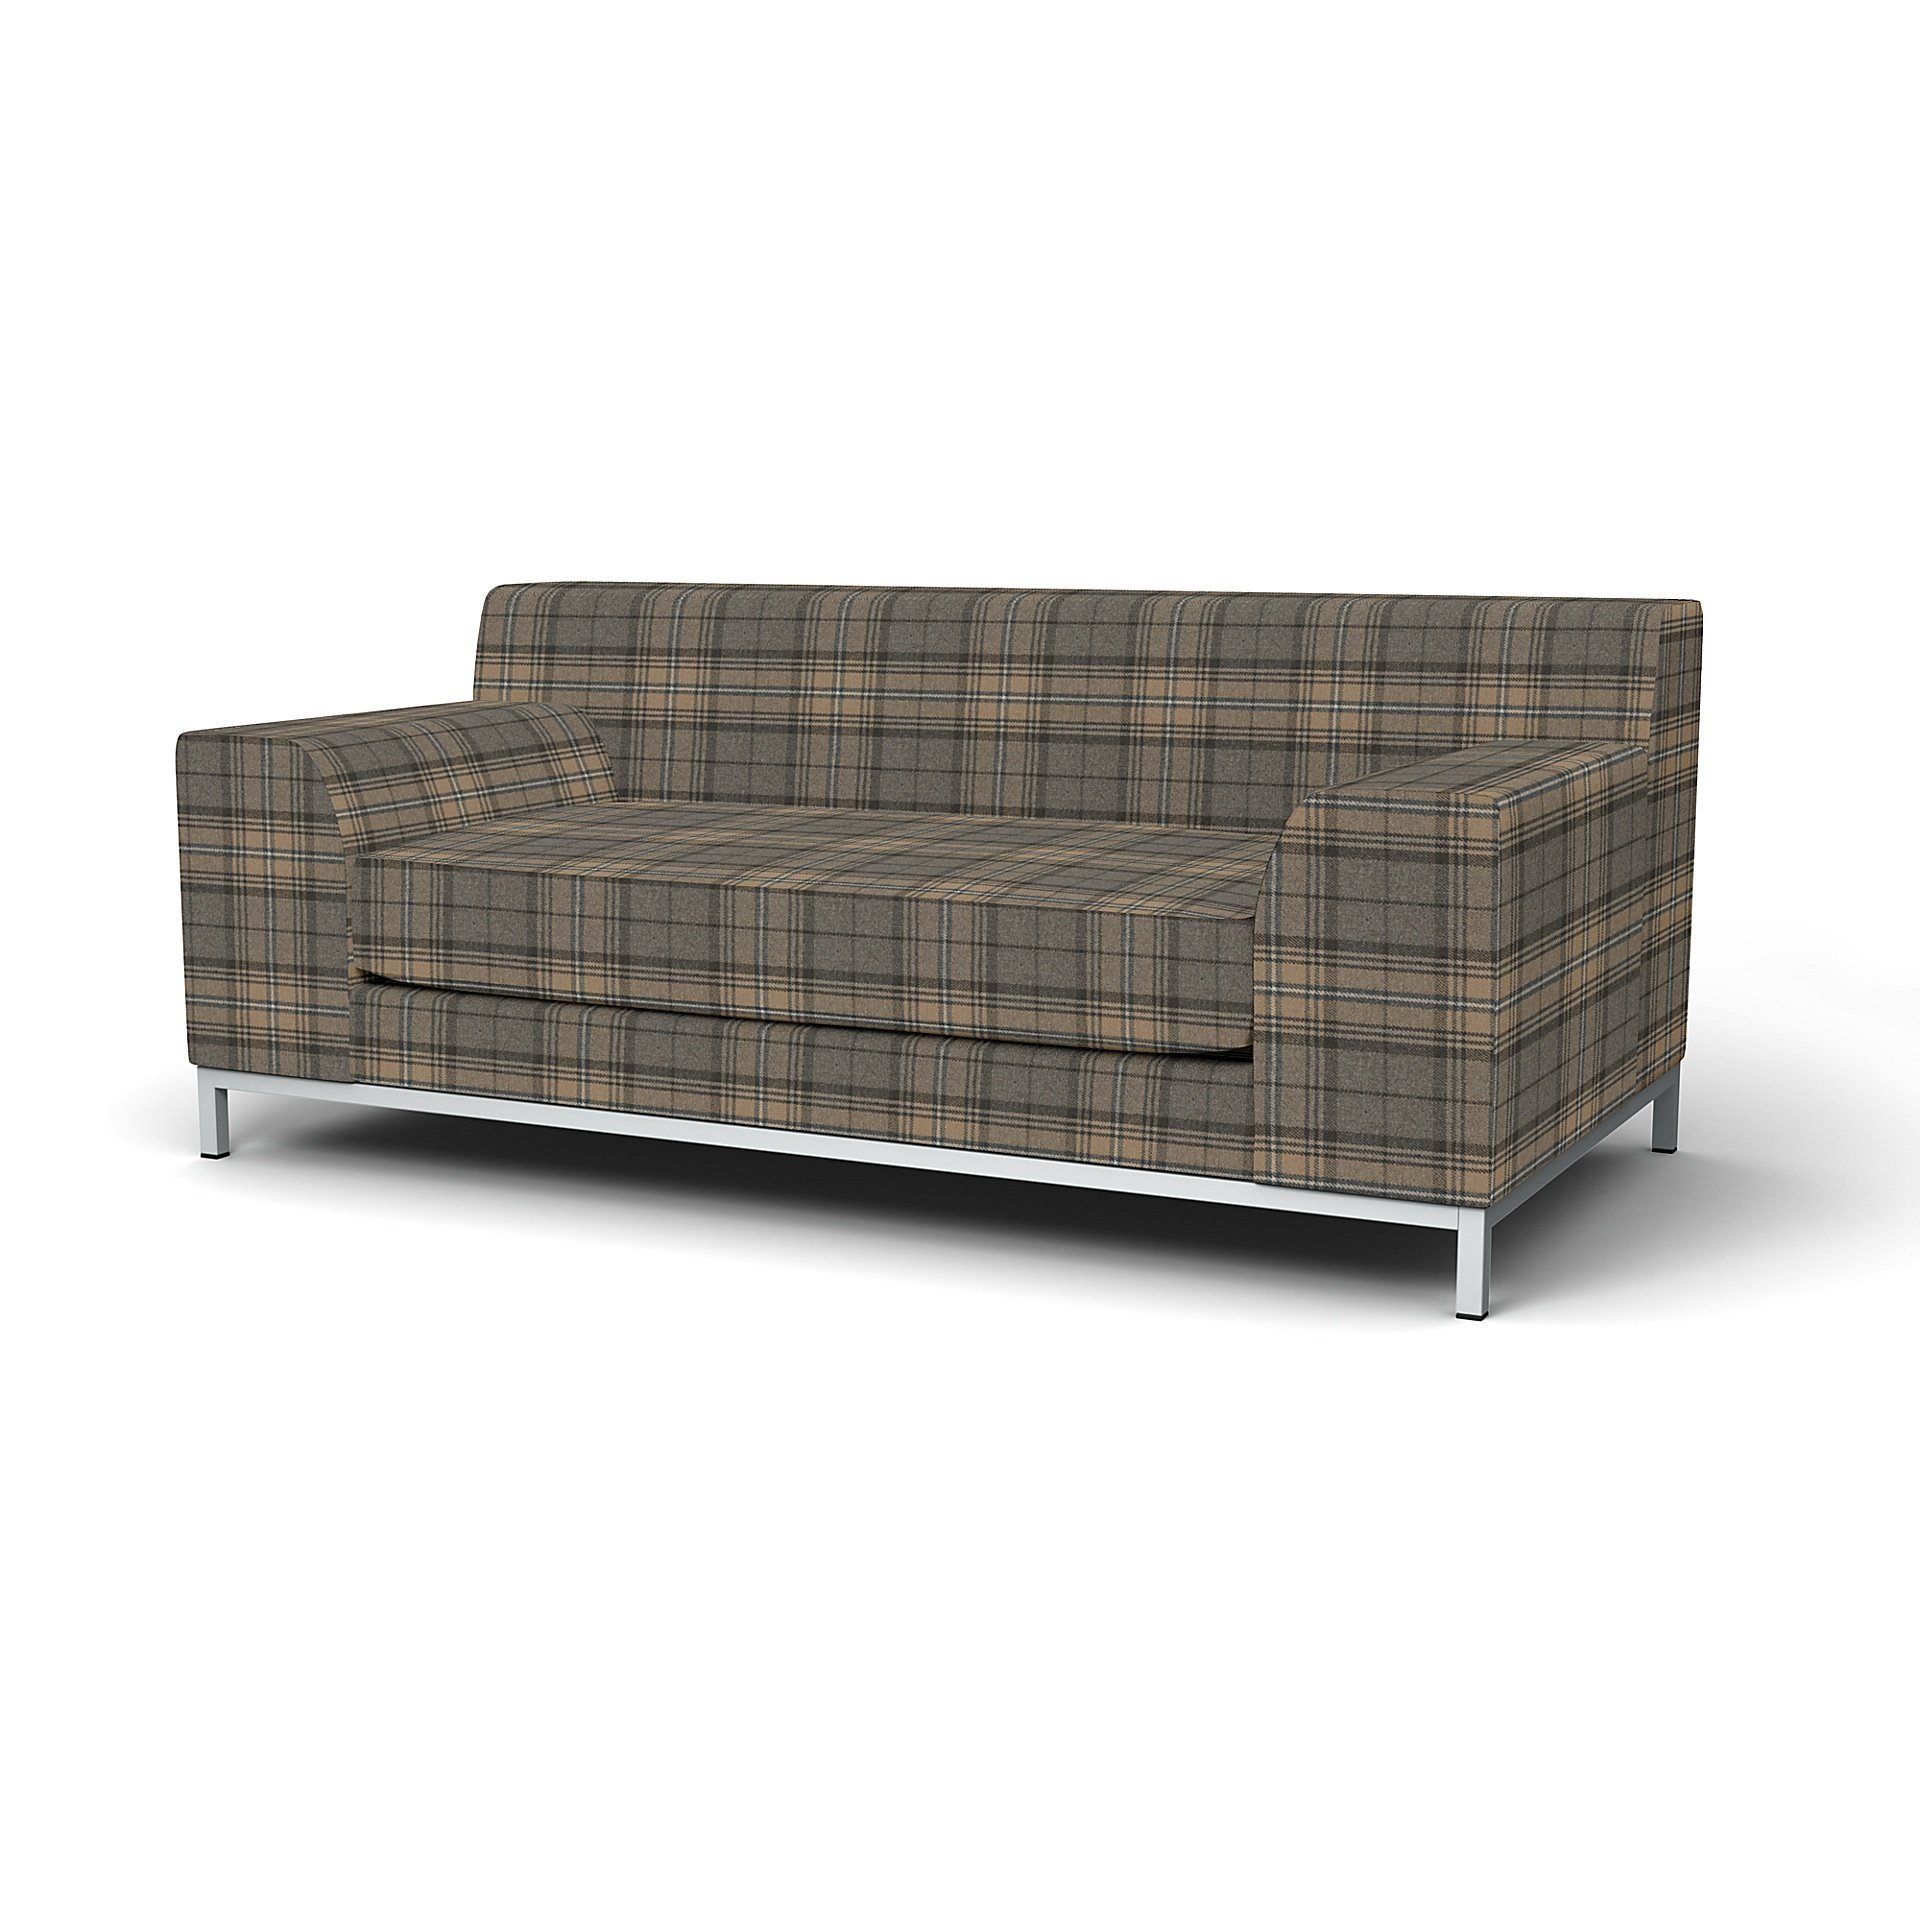 IKEA - Kramfors 2 Seater Sofa Cover, Bark Brown, Wool - Bemz